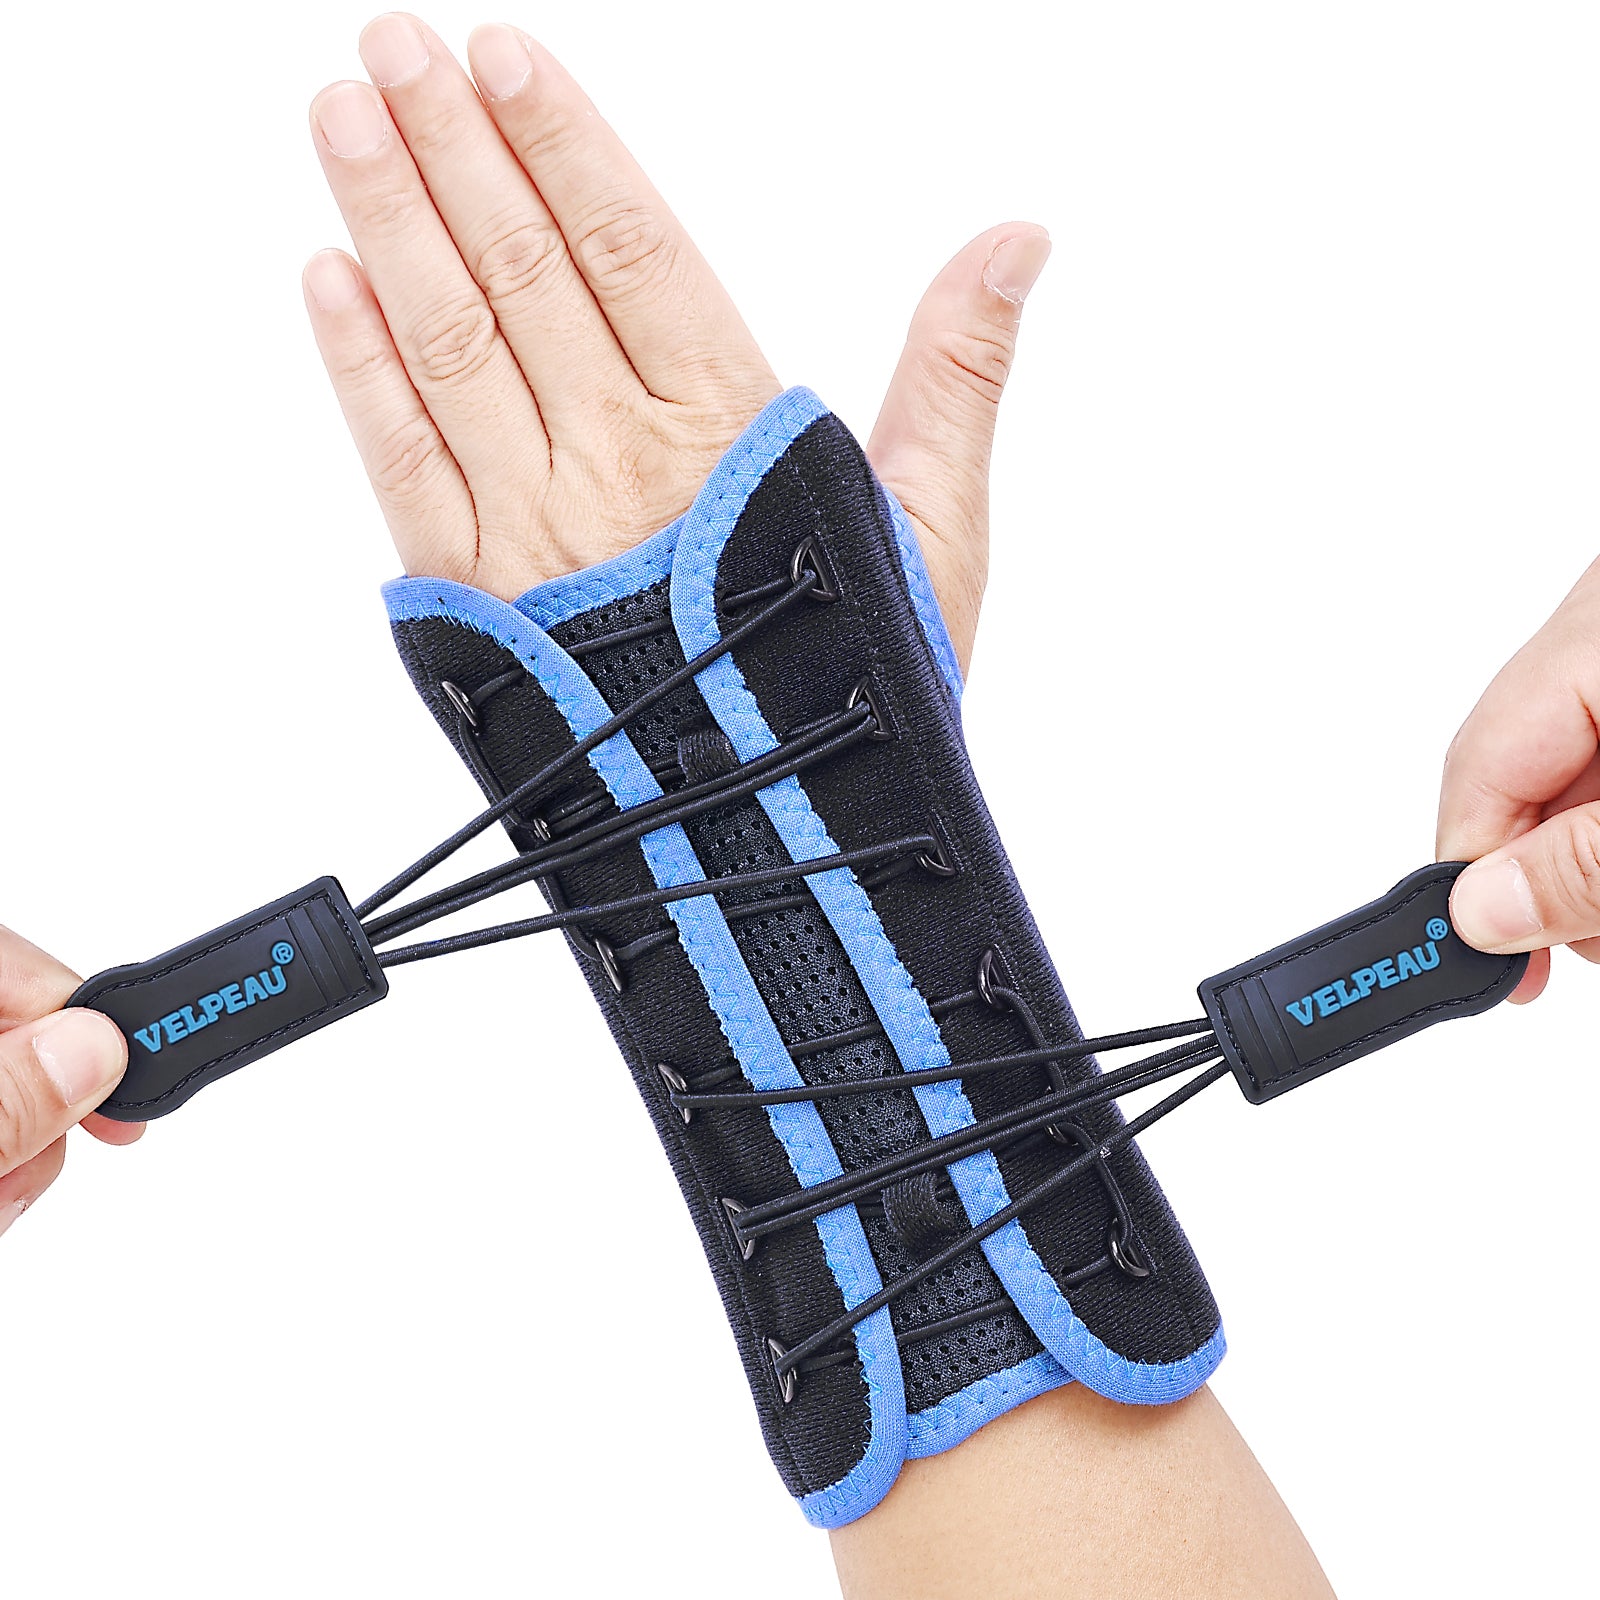 Velpeau Wrist Support Brace Splint Compression Sleeve Arthritis